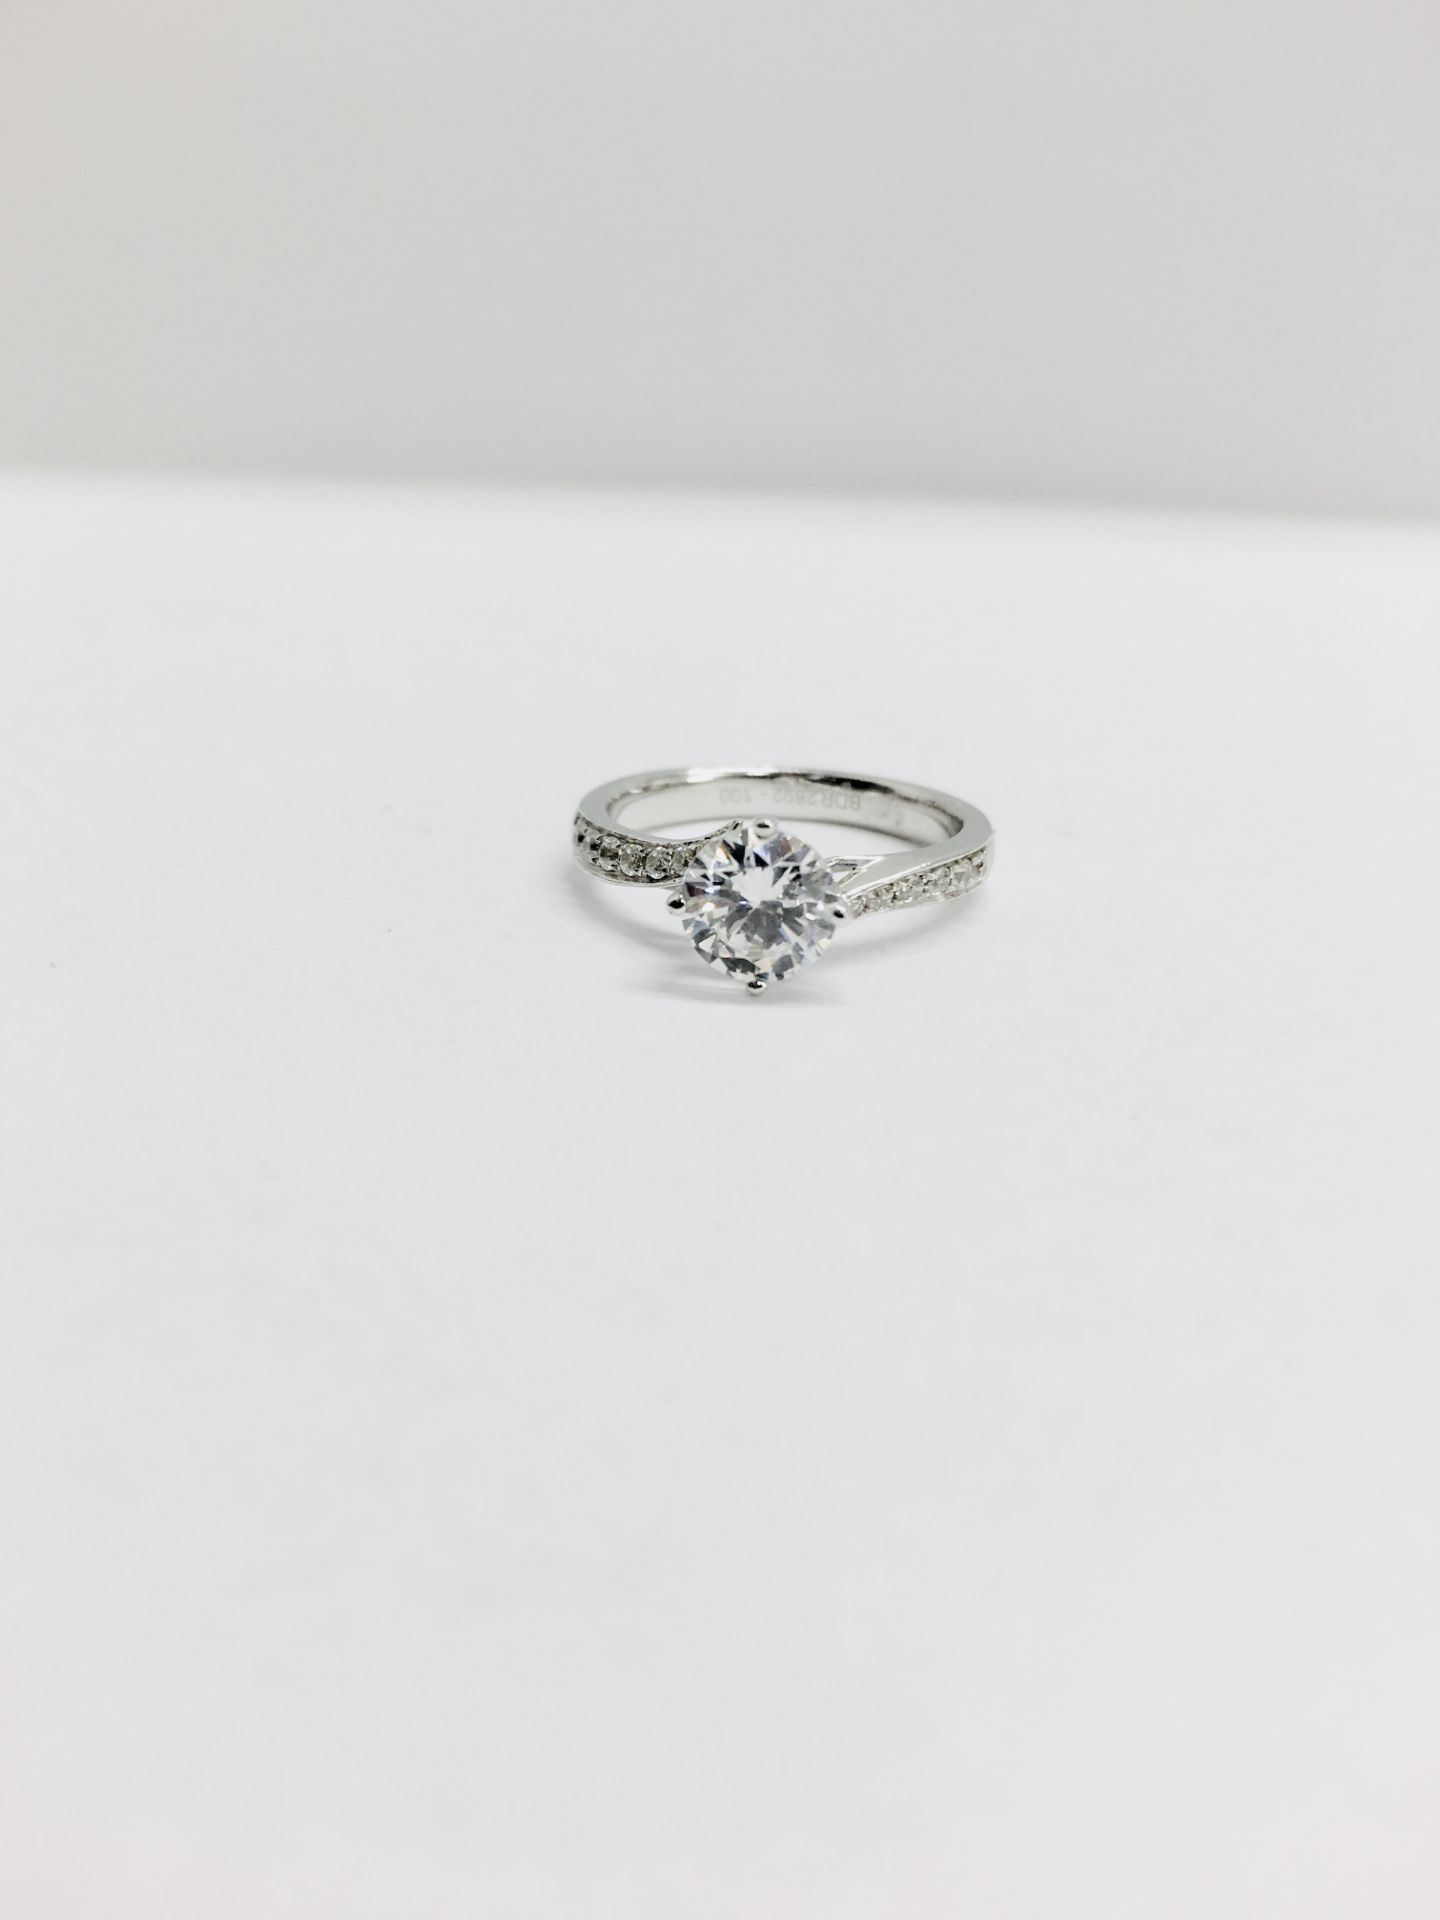 Platinum diamond solitaire ring ,0.50ct vvs1 clarity F colour natural brilliant cut diamond,3.